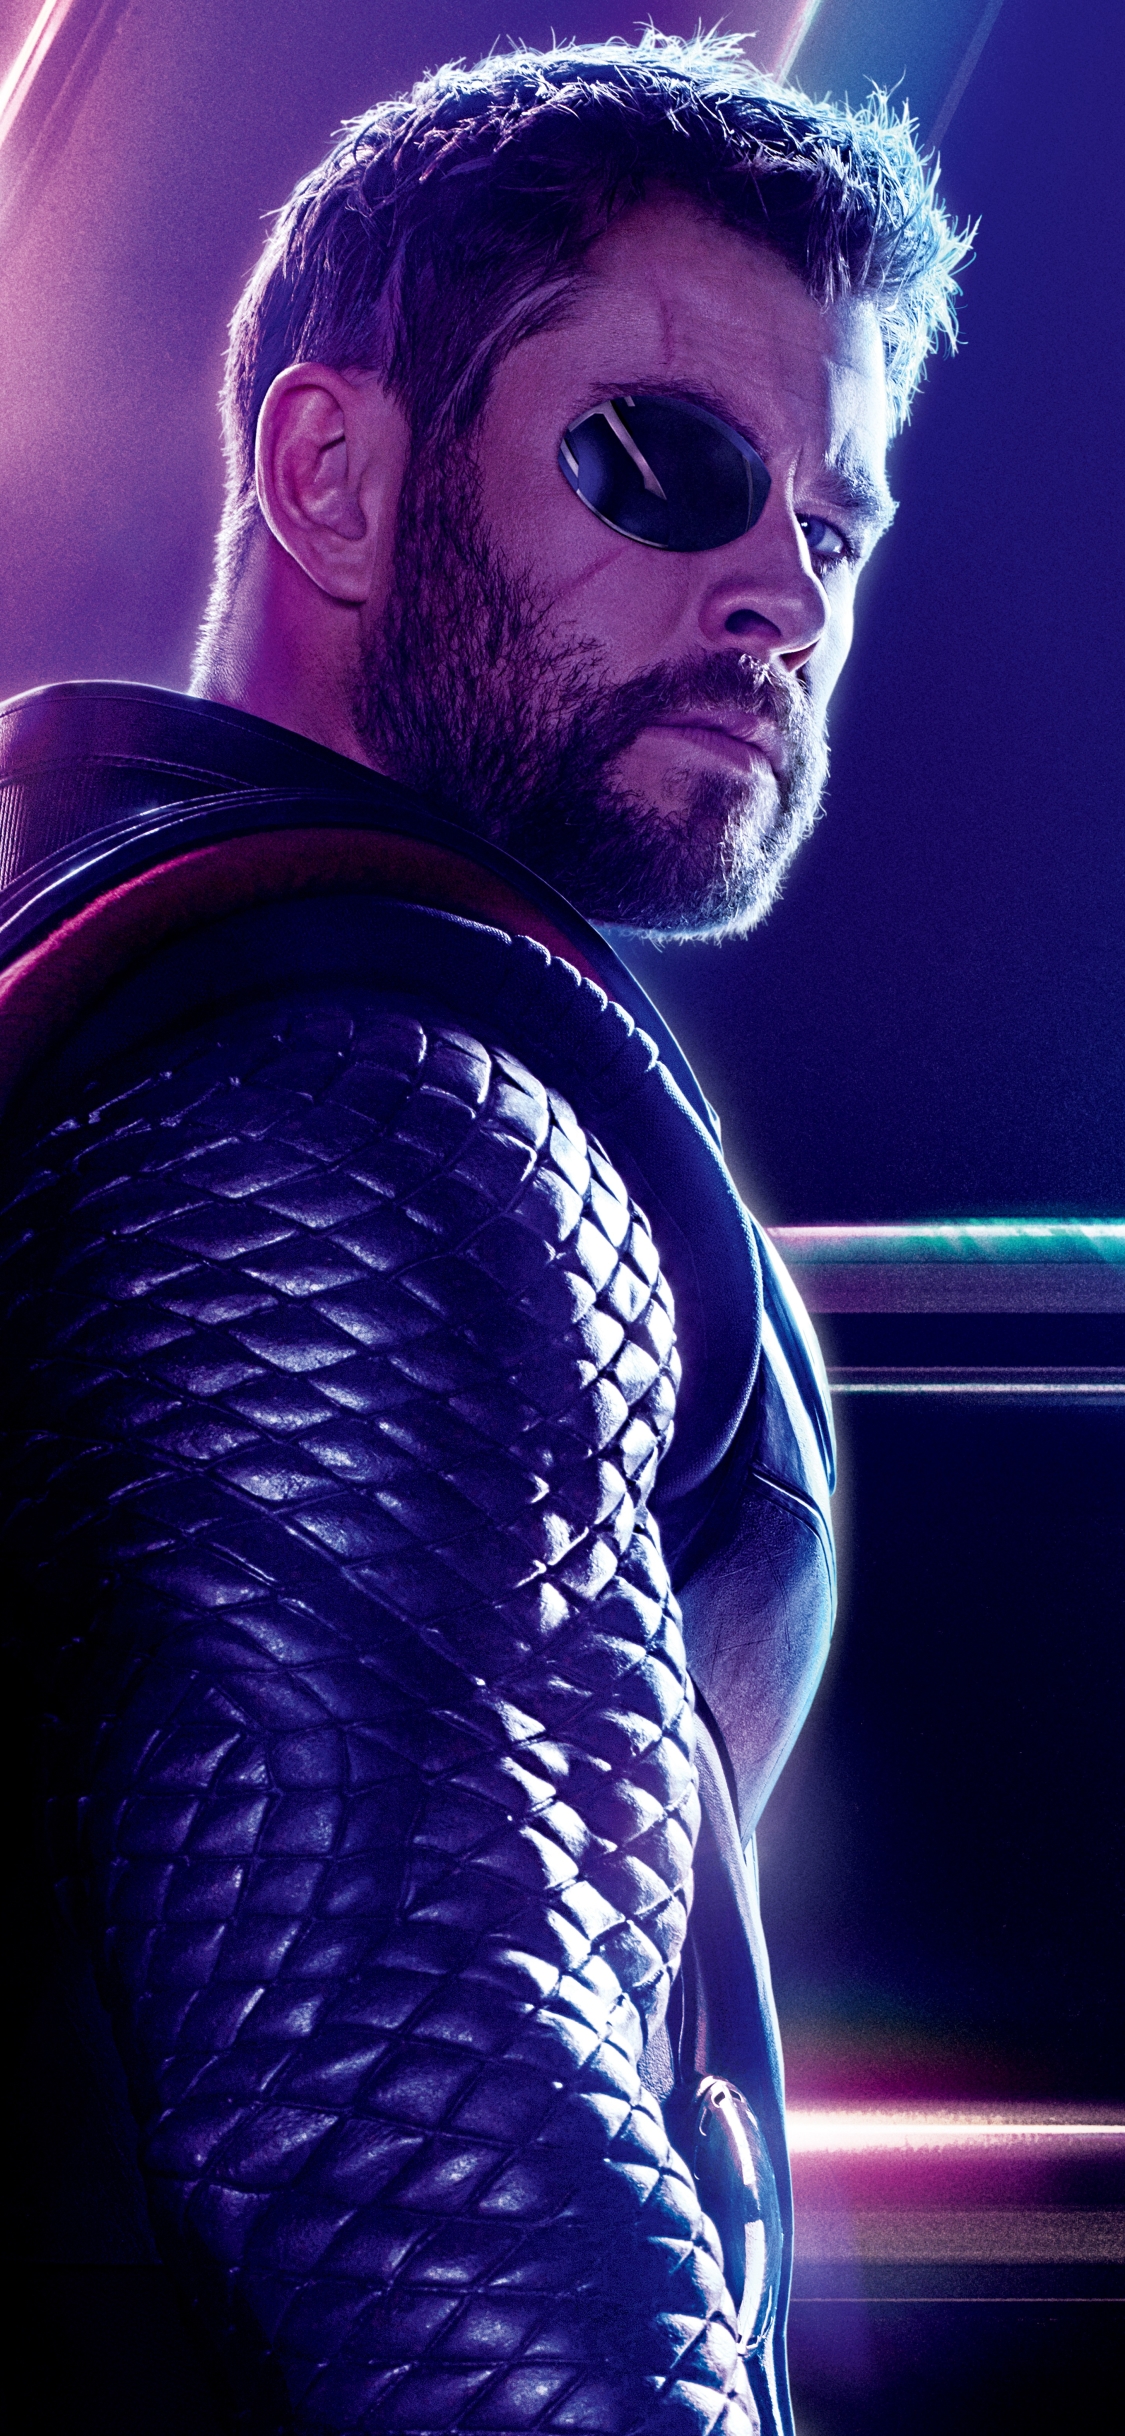 Descarga gratuita de fondo de pantalla para móvil de Los Vengadores, Películas, Thor, Chris Hemsworth, Vengadores: Guerra Infinita.